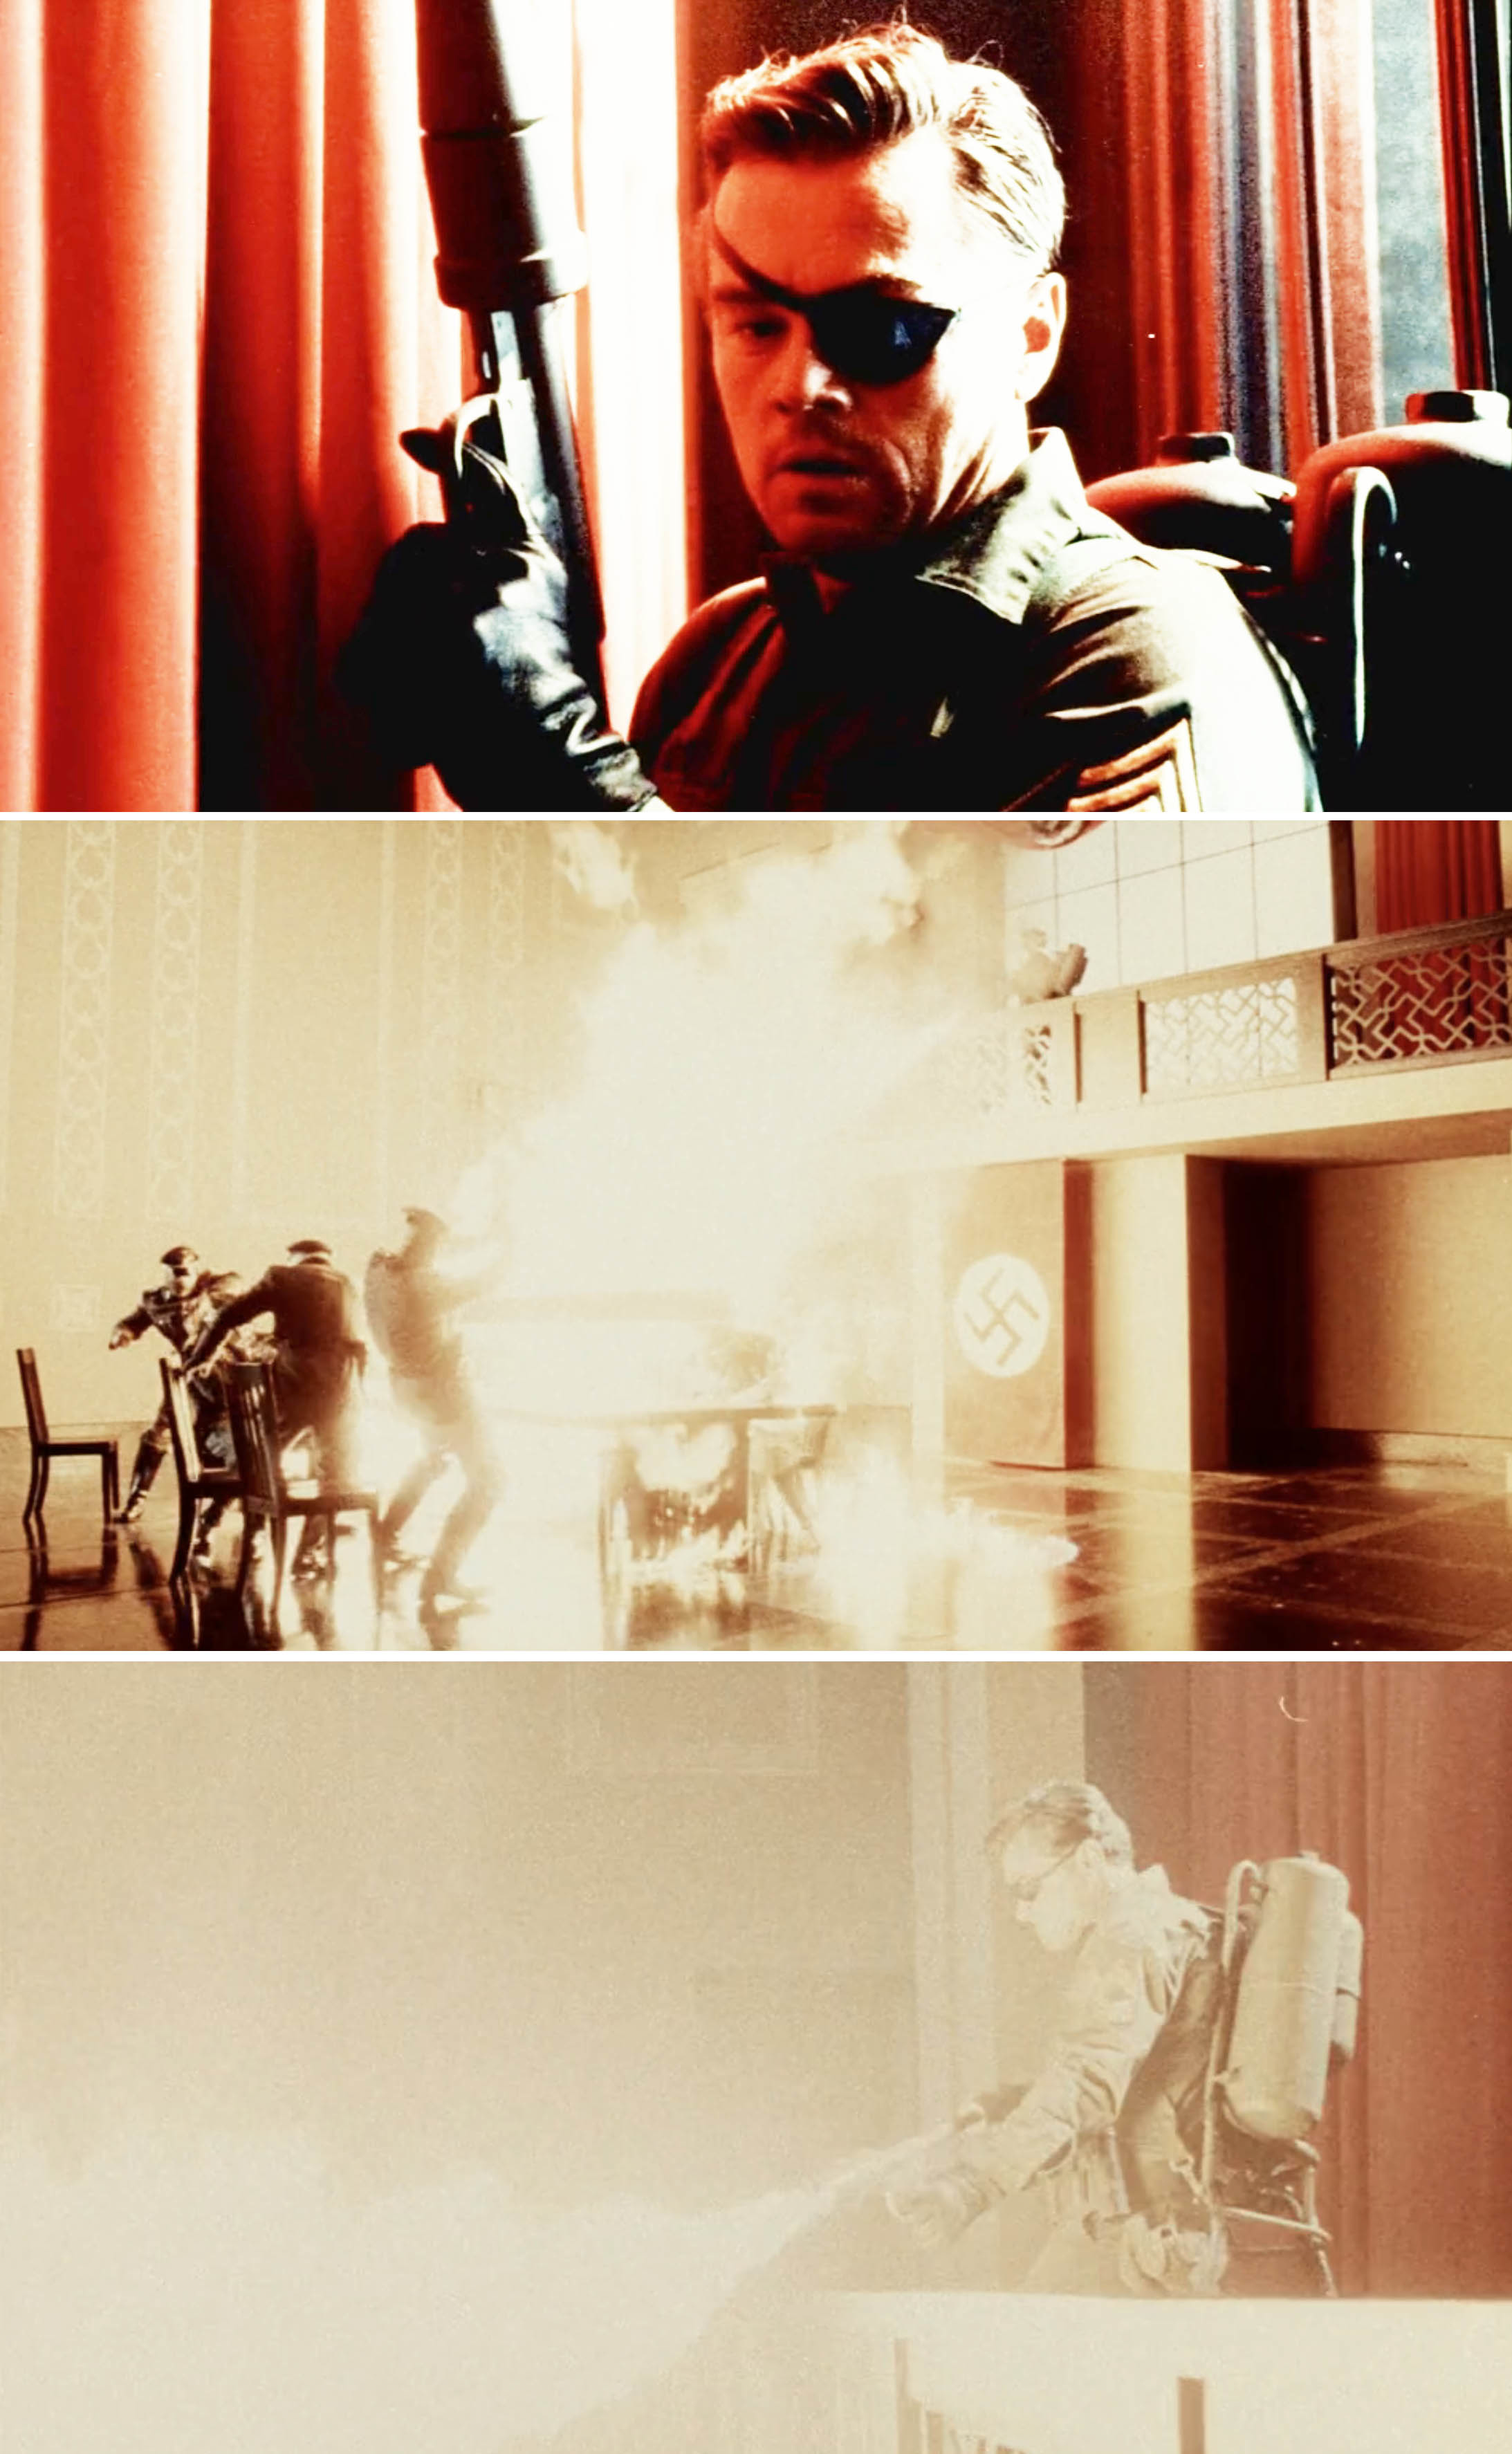 Leonardo DiCaprio as Rick using a flamethrower in a scene involving Nazis